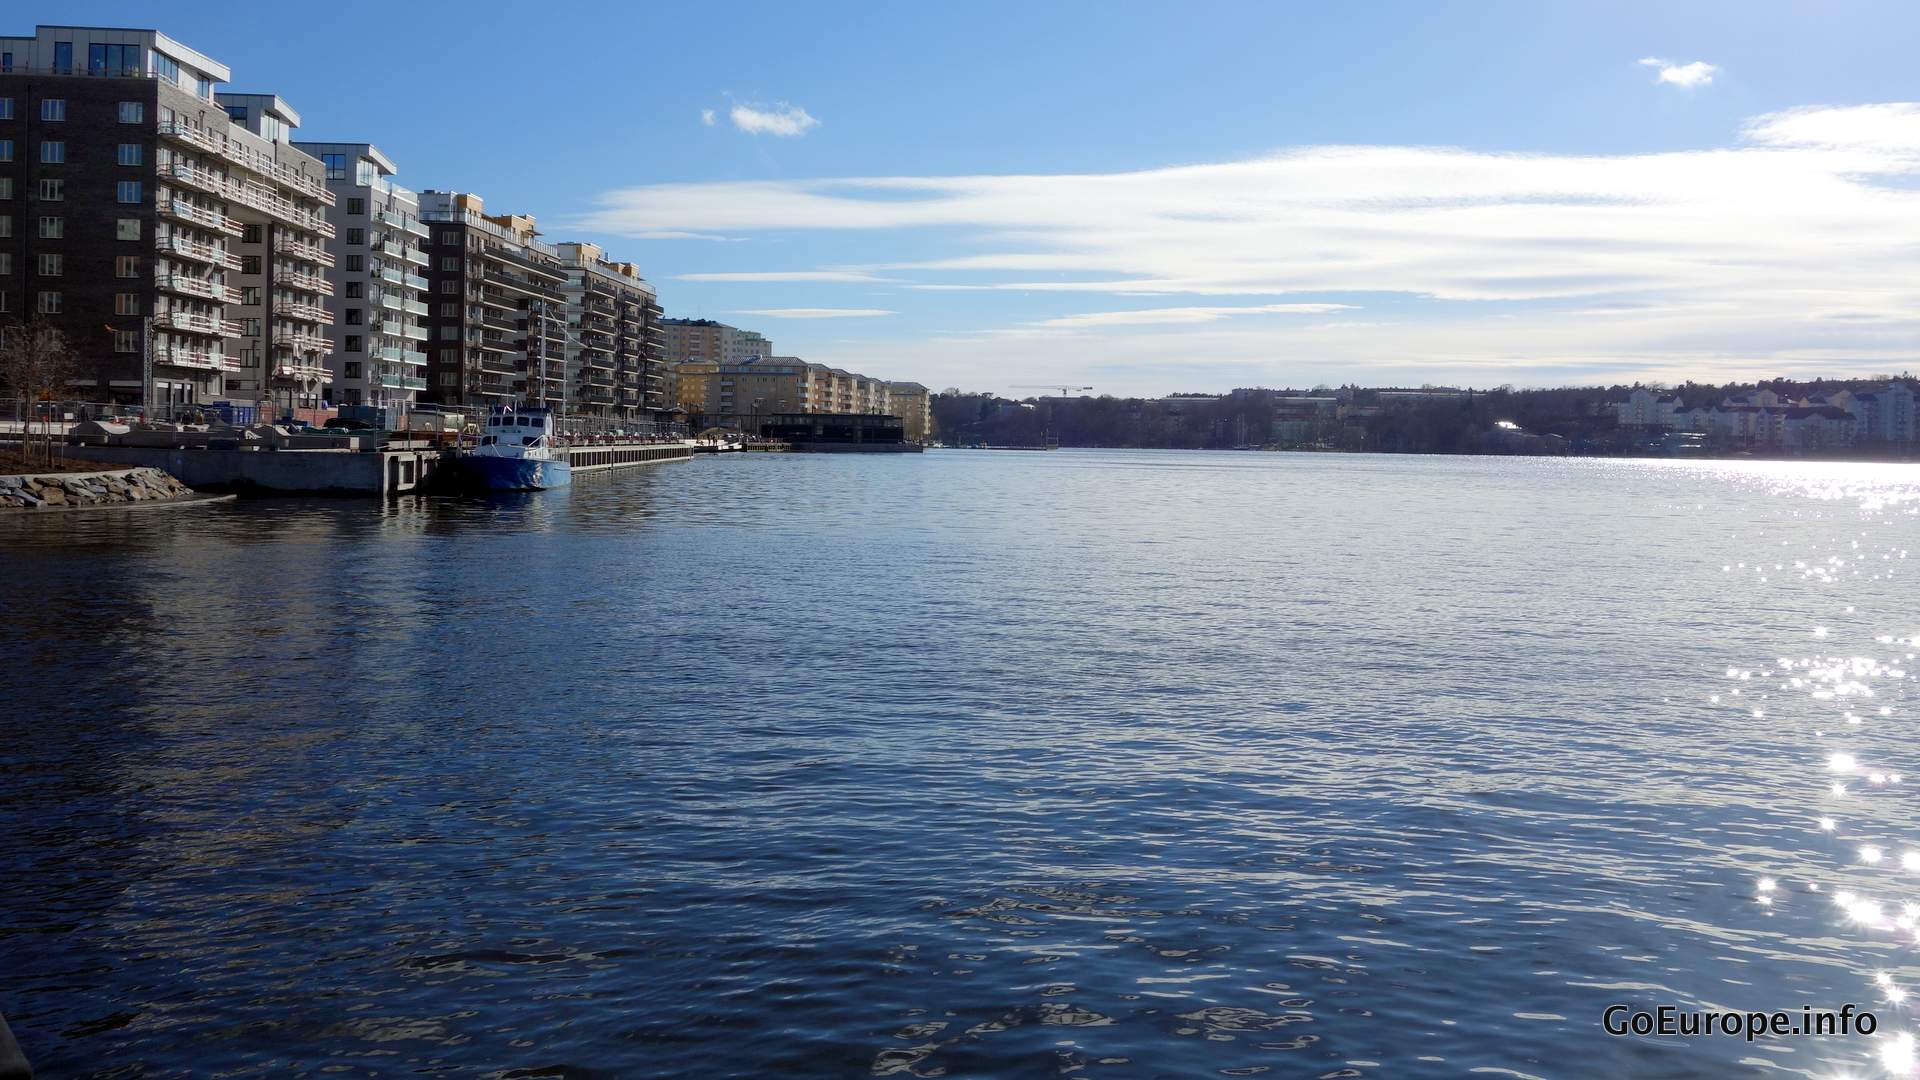 Take a walk around the island named Kungsholmen and enjoy nice views.